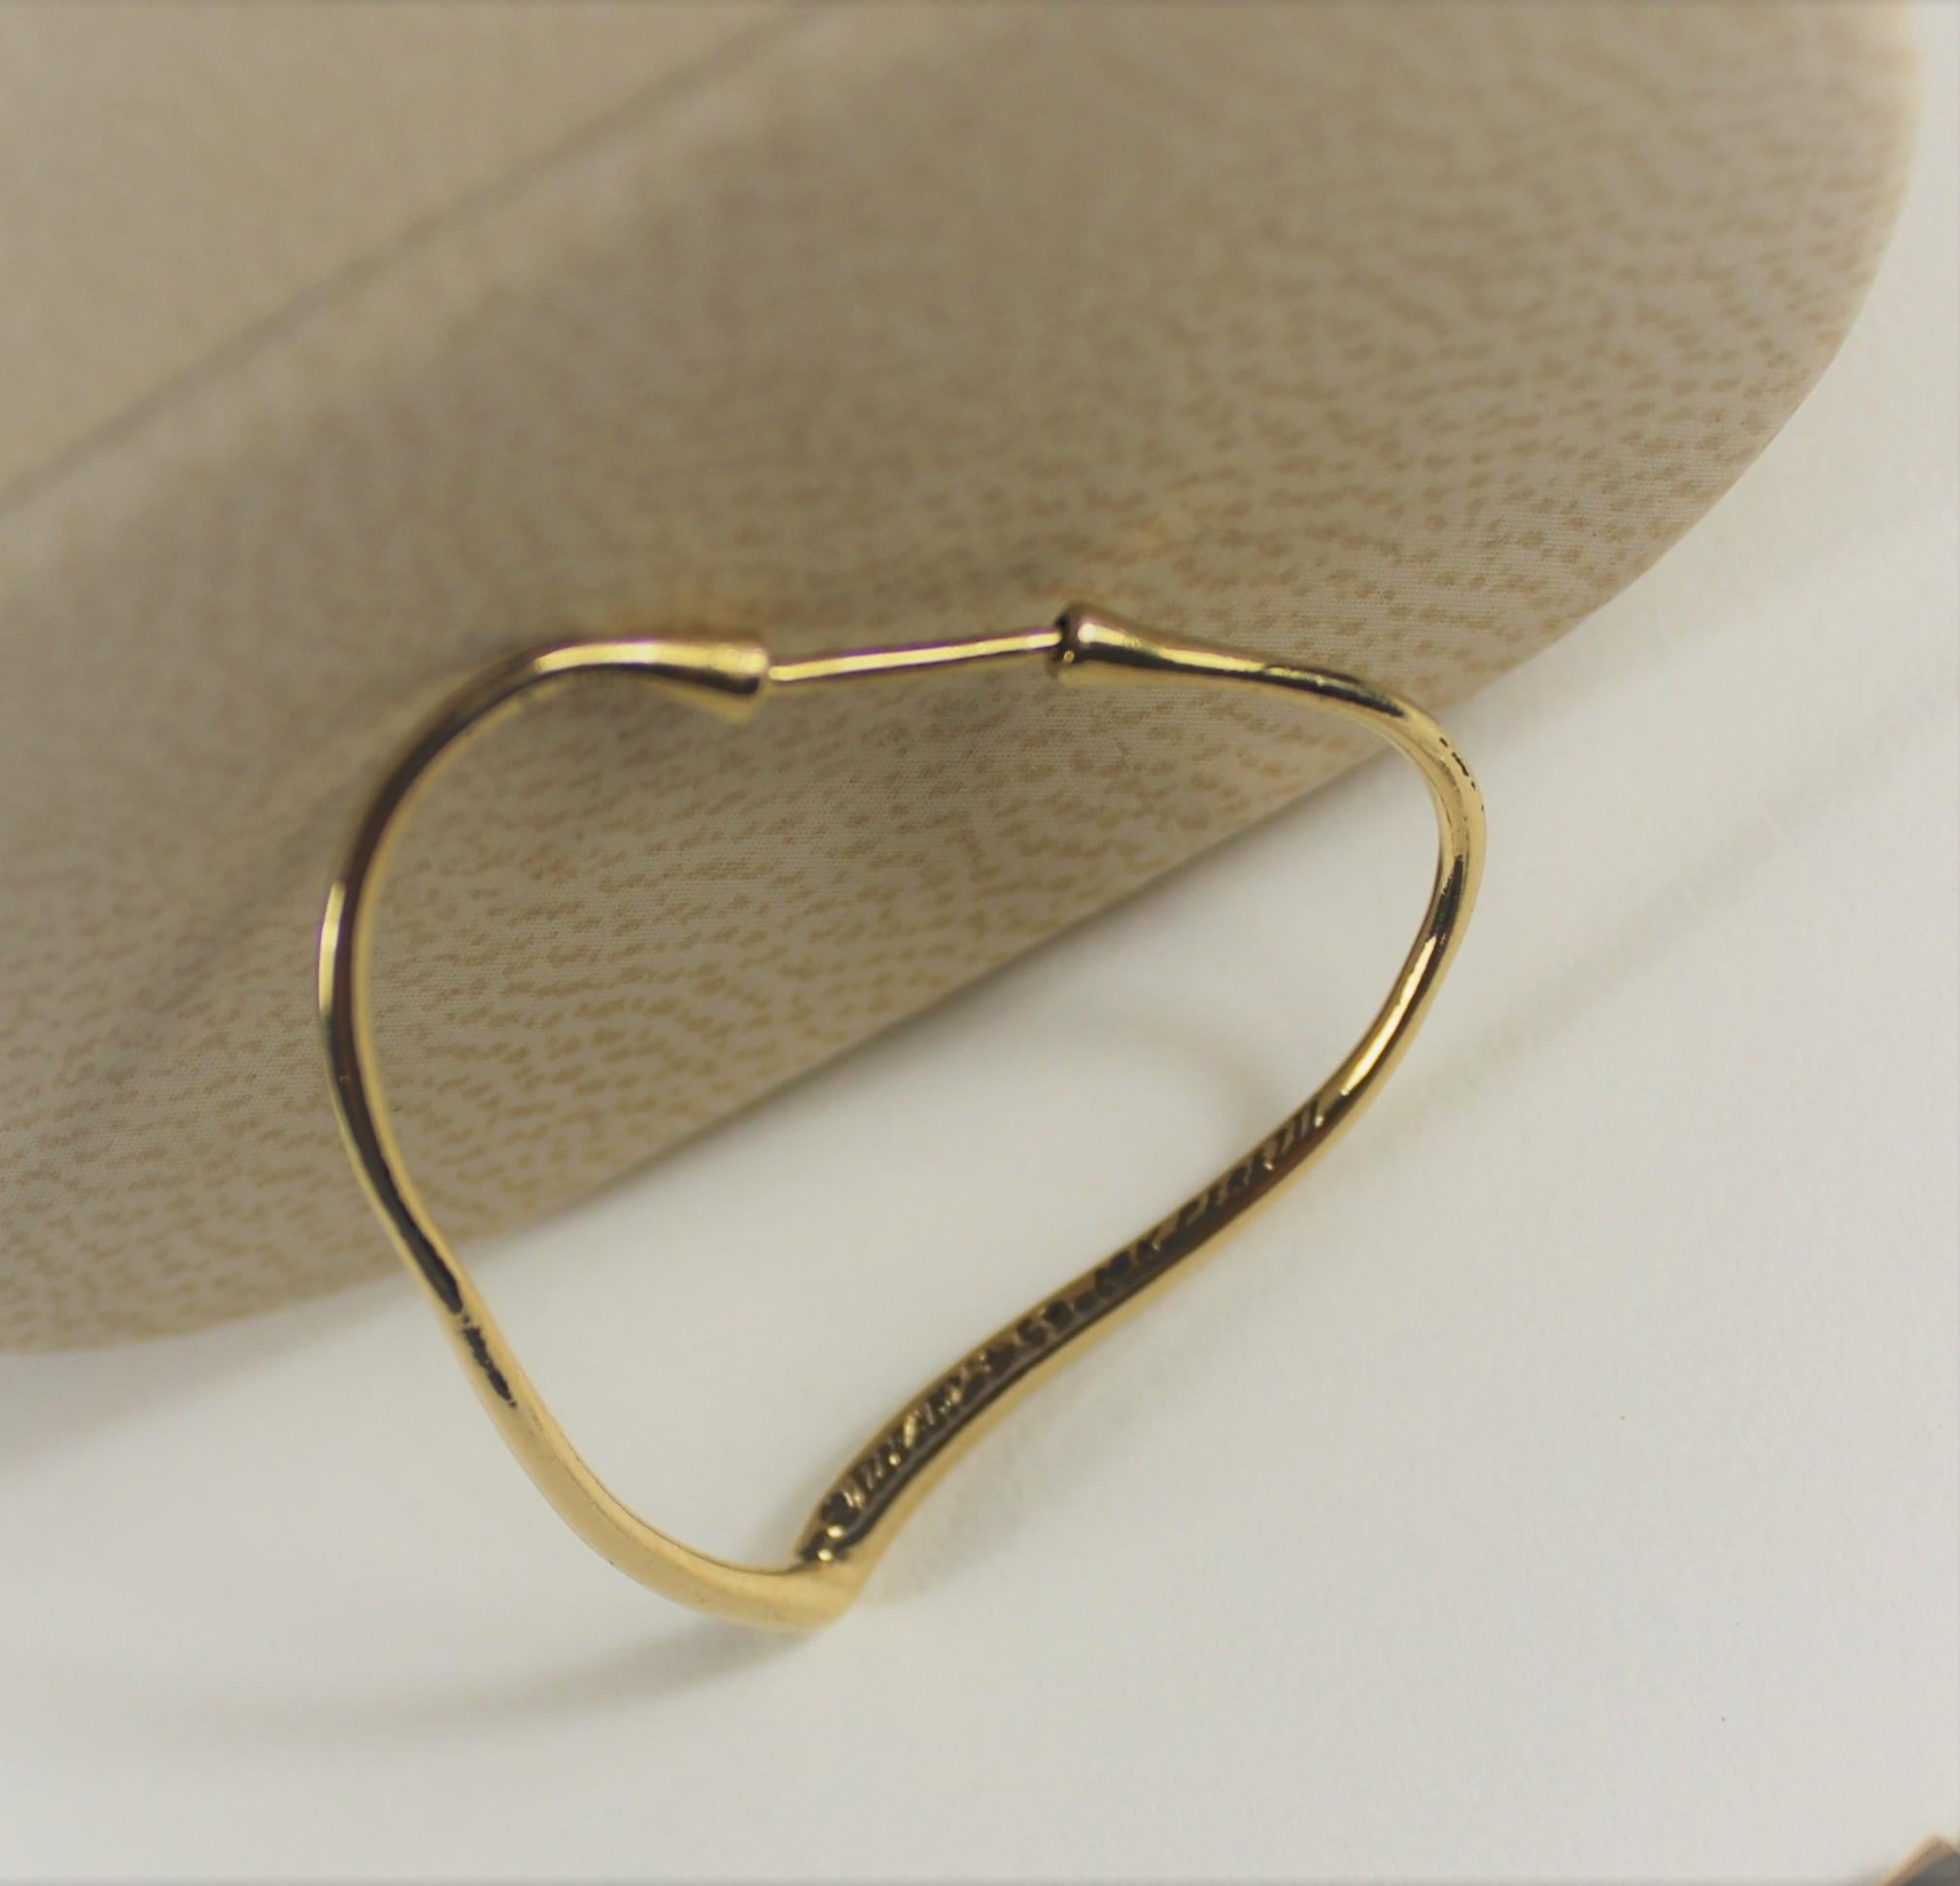 Tiffany & Co. Heart Shape Earrings by Peretti, circa 1980s (Moderne)